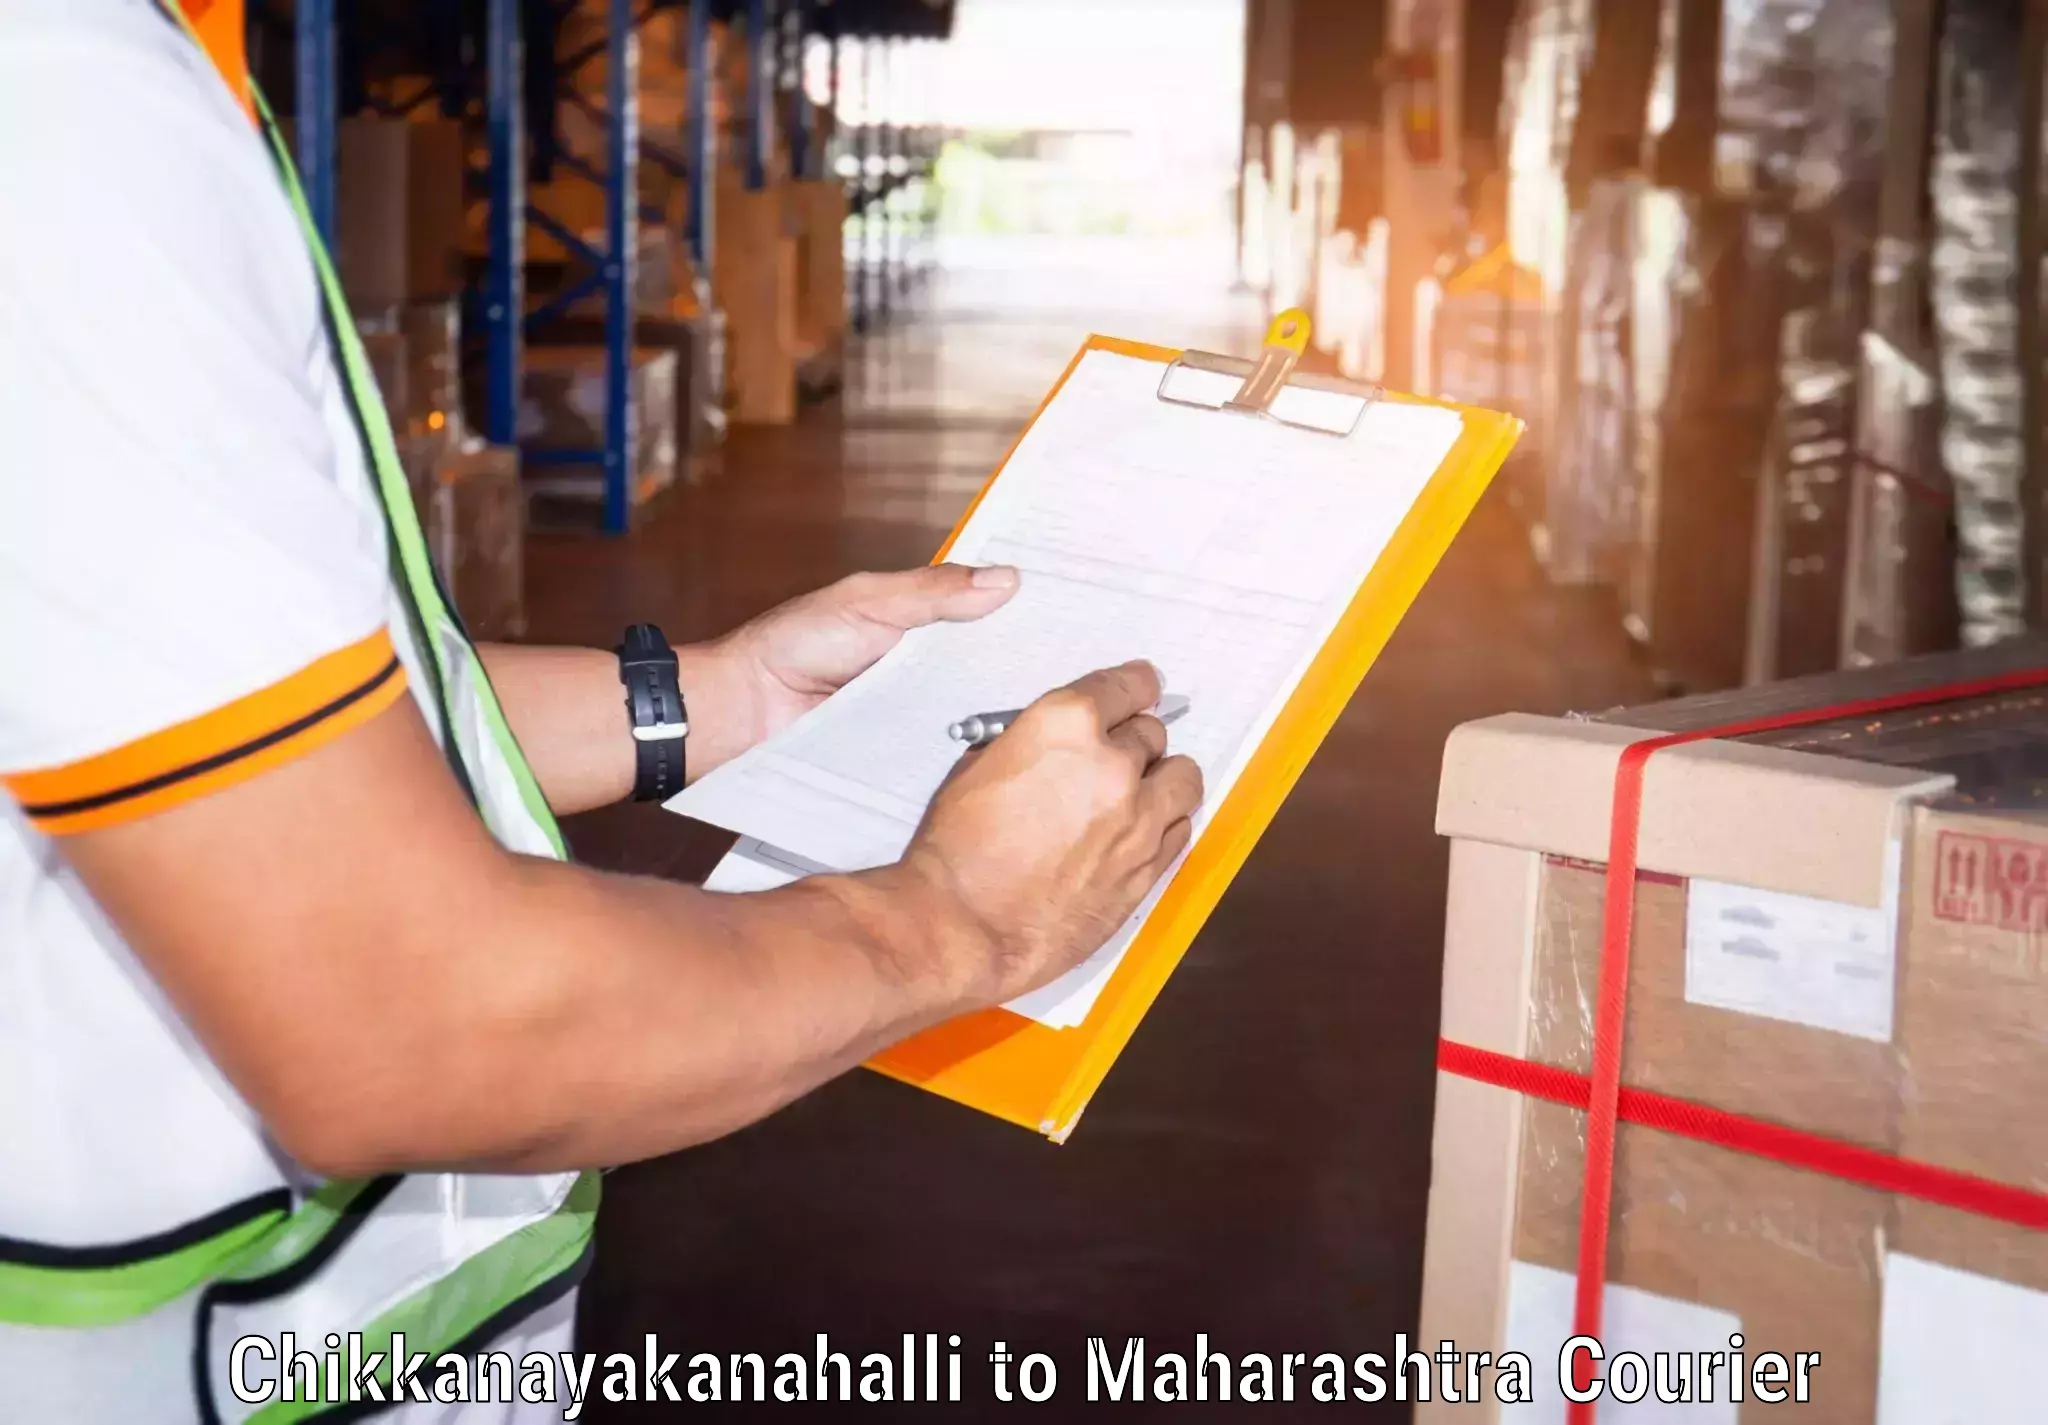 Fast delivery service Chikkanayakanahalli to Alibag